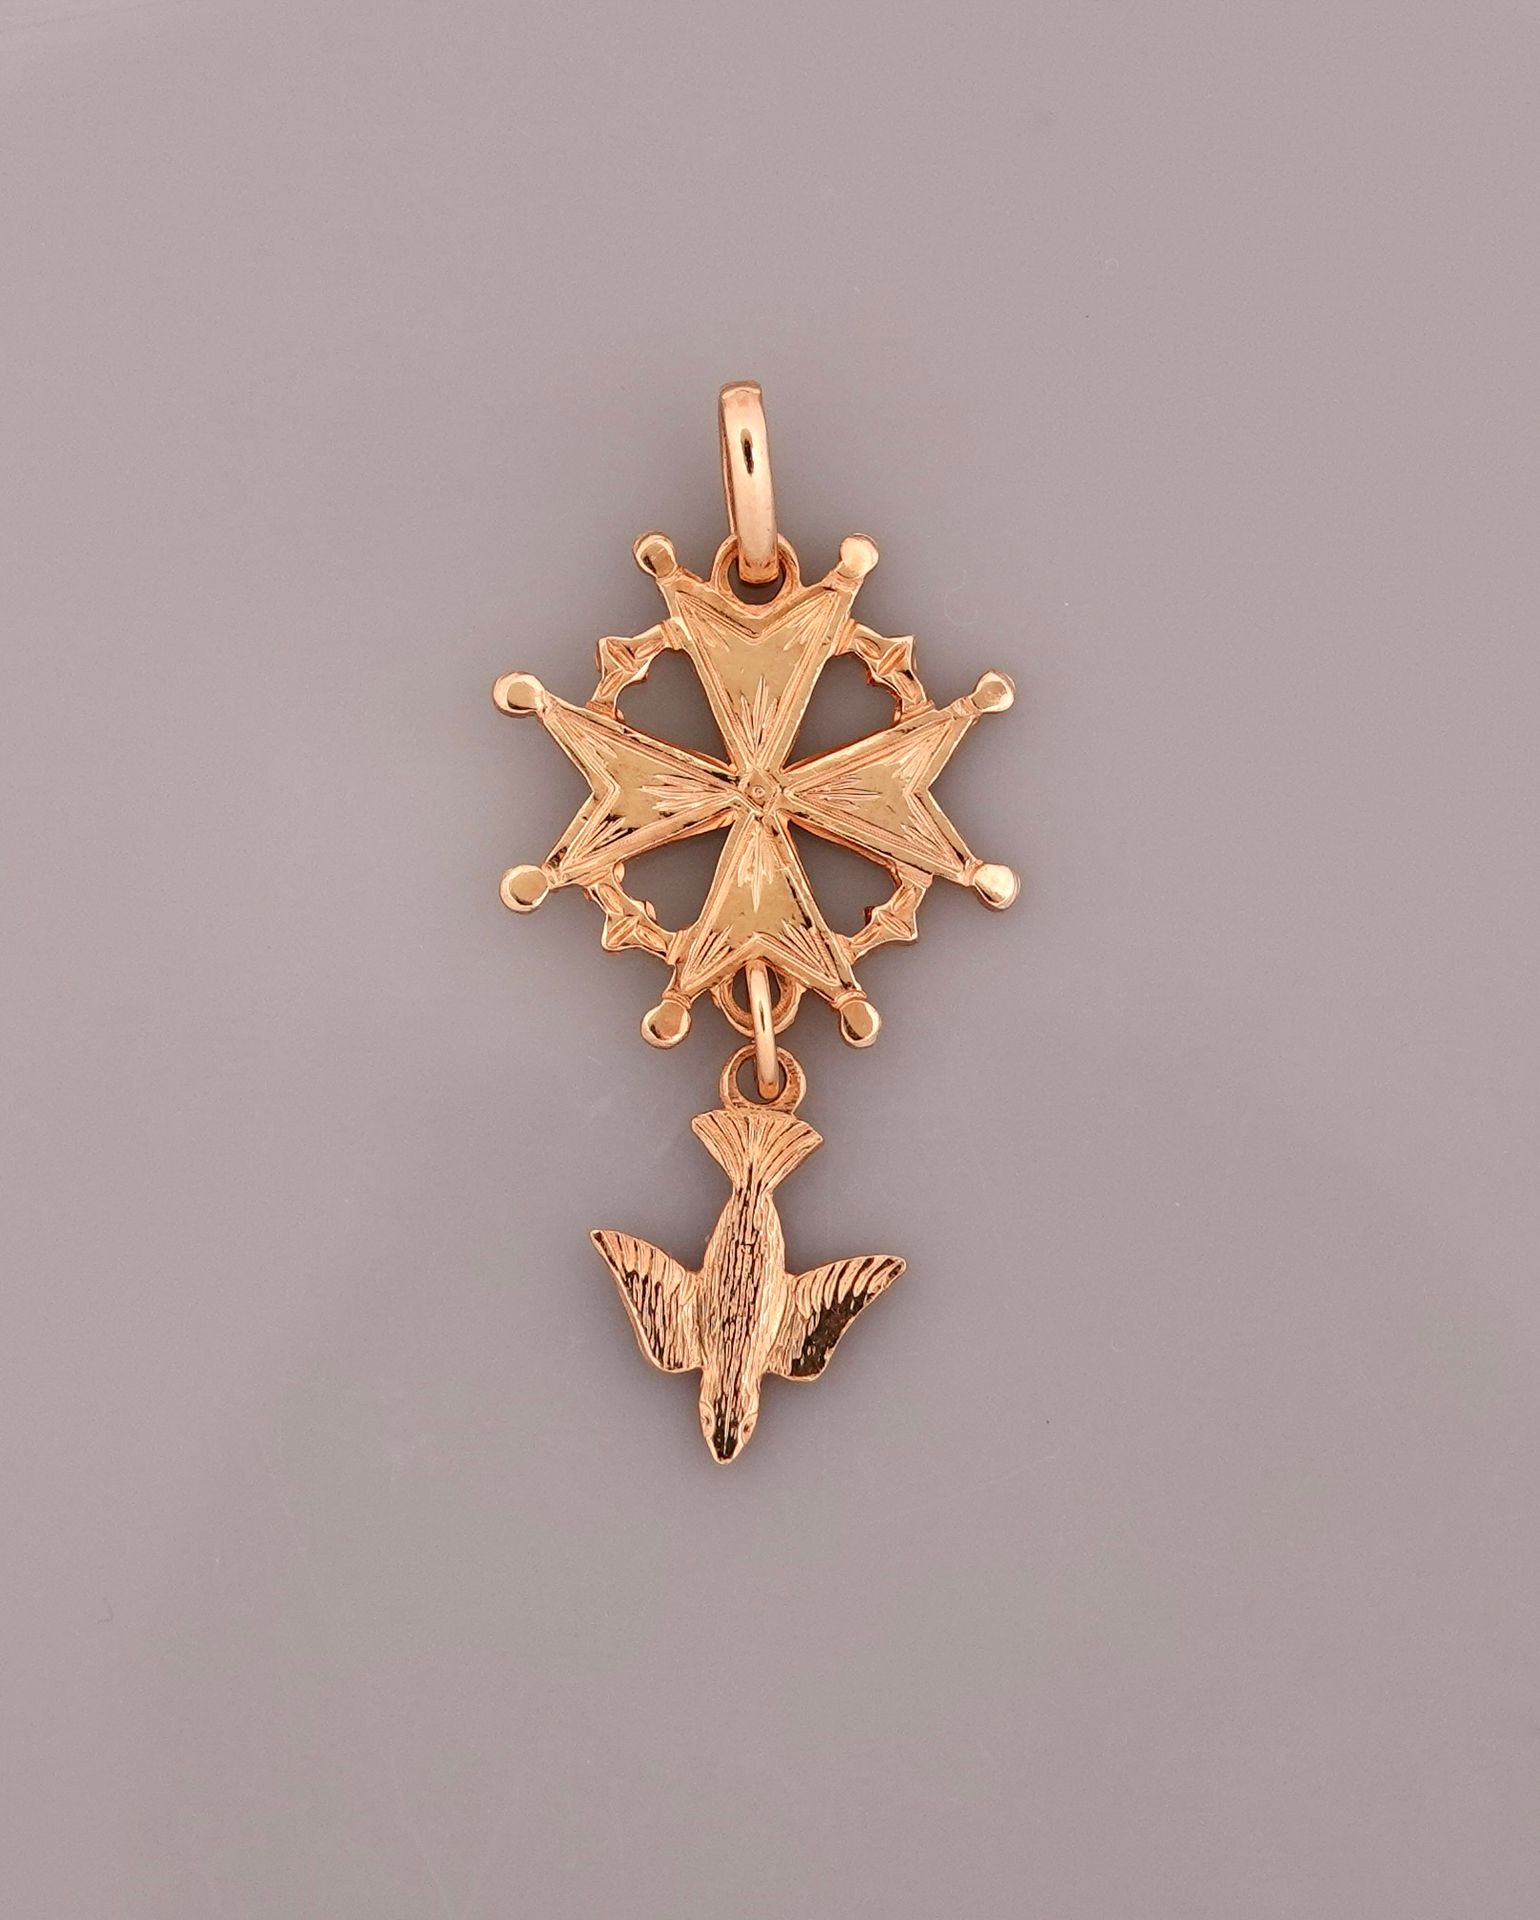 Null Gold-plated metal St Esprit pendant, height 3,8 cm, weight : 1,63gr. Gross.